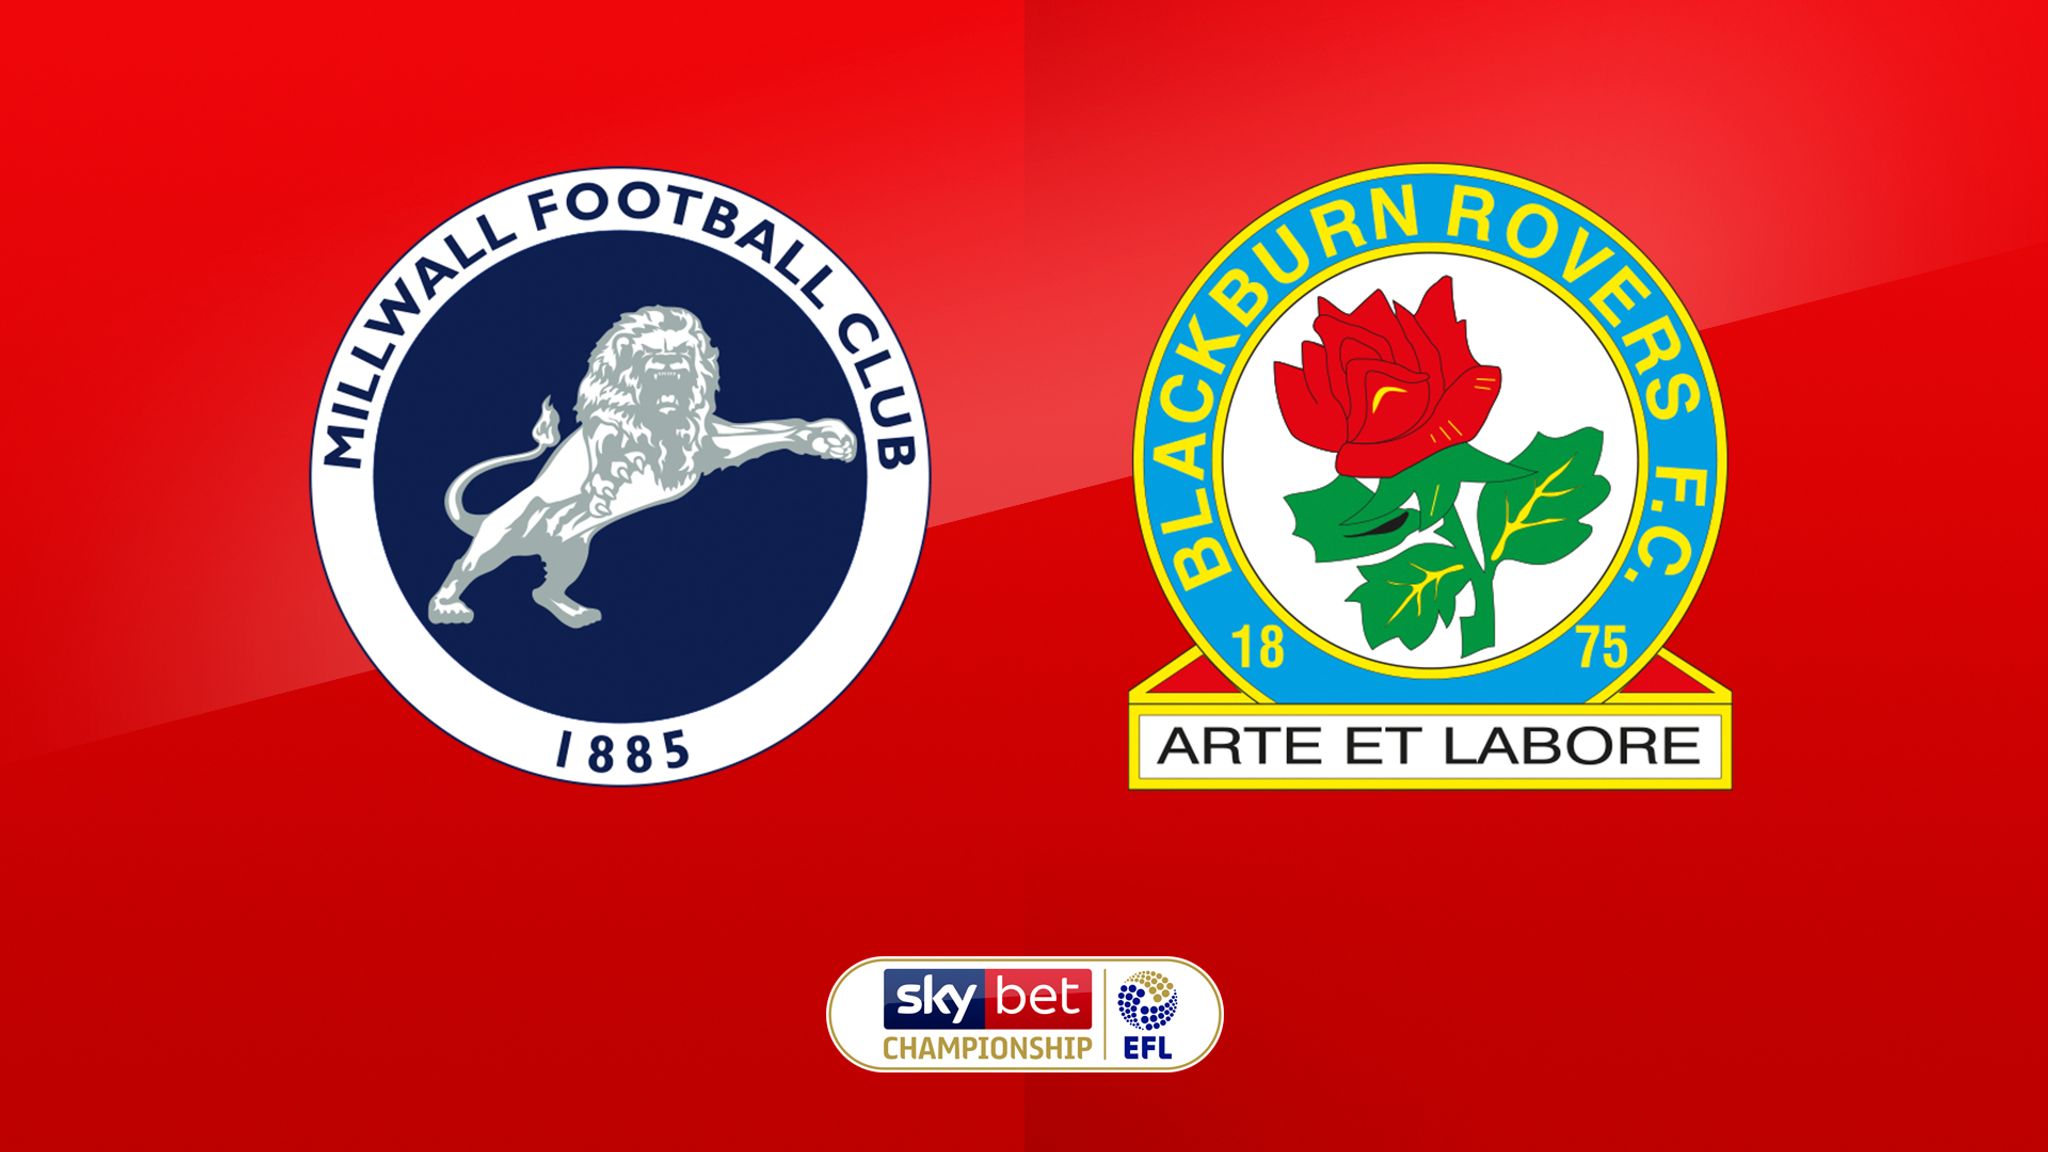 Millwall vs Blackburn preview: Championship clash live on Sky Sports  Football, Football News